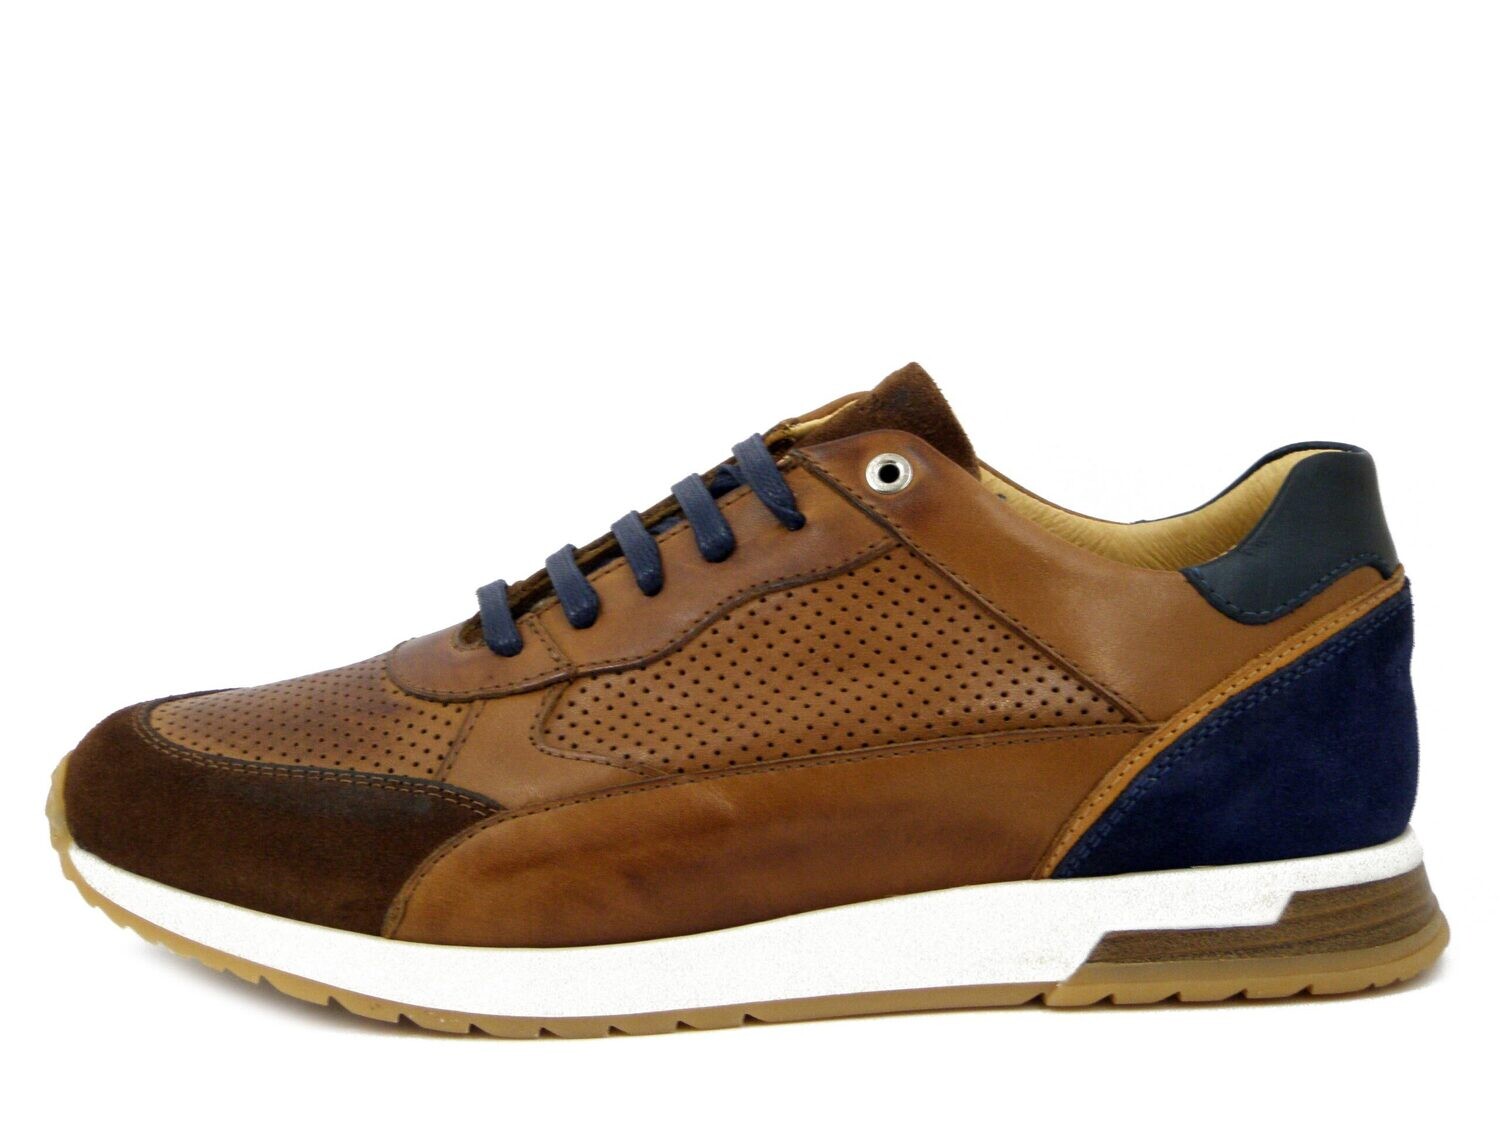 Sneakers Uomo in Pelle Marrone, Plantare Estraibile, Made in Italy, EXTON - 388